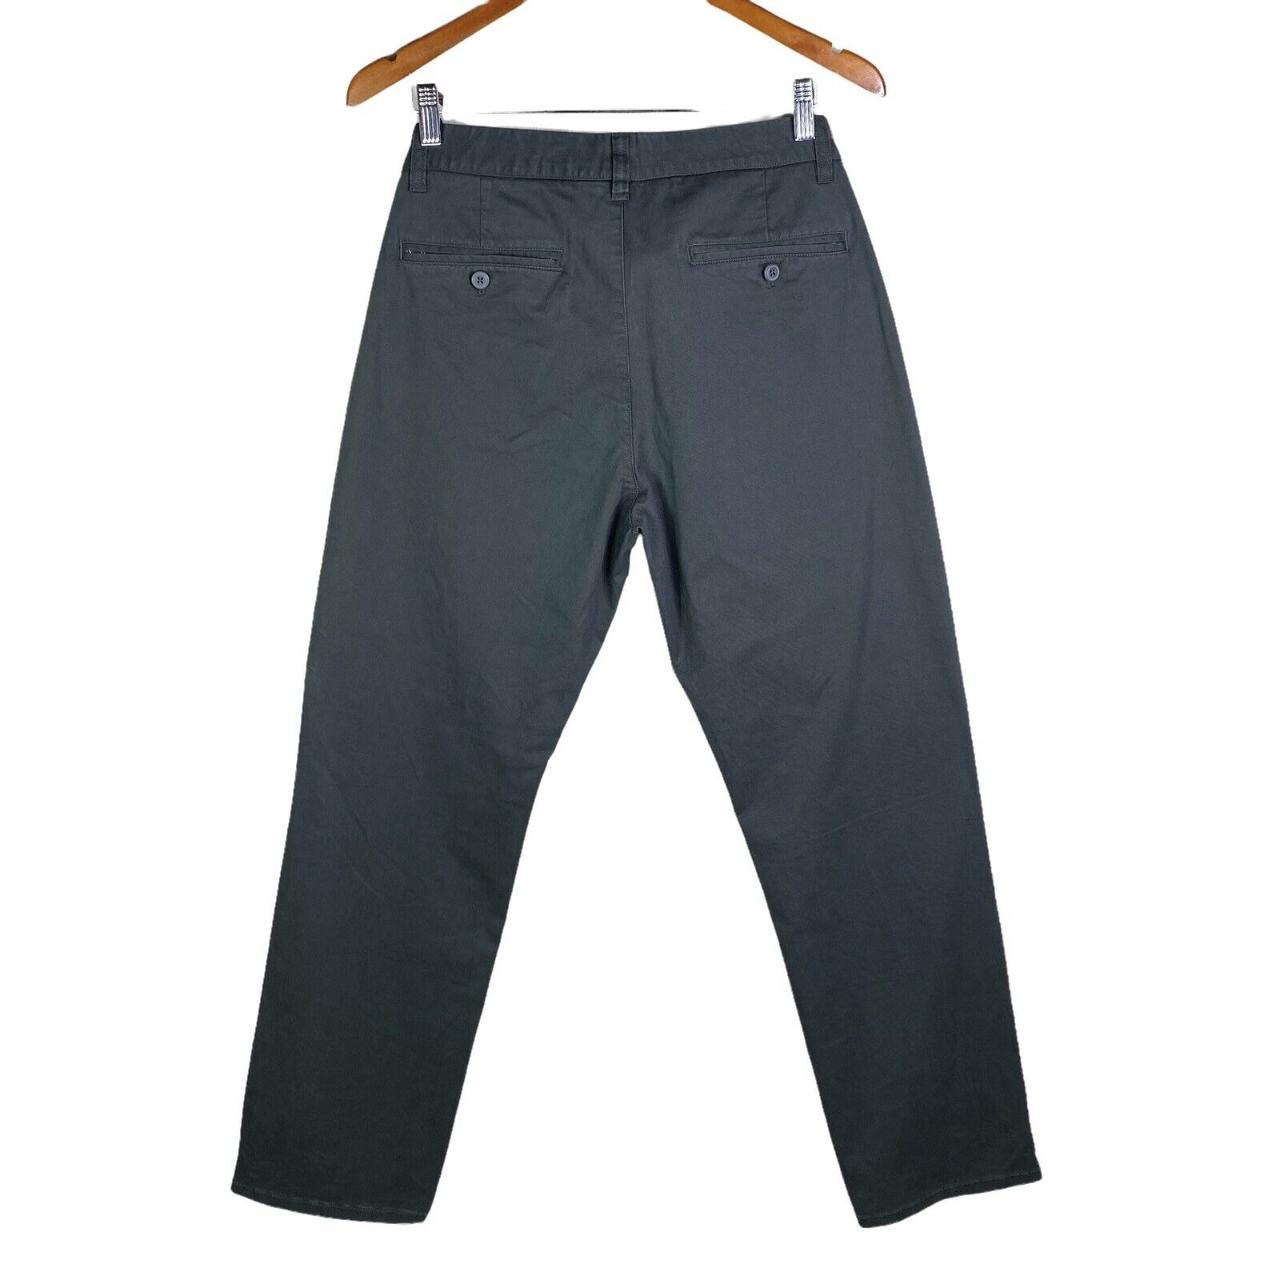 Bonobos Pants Mens 31x30 Gray Tailored Straight... - Depop